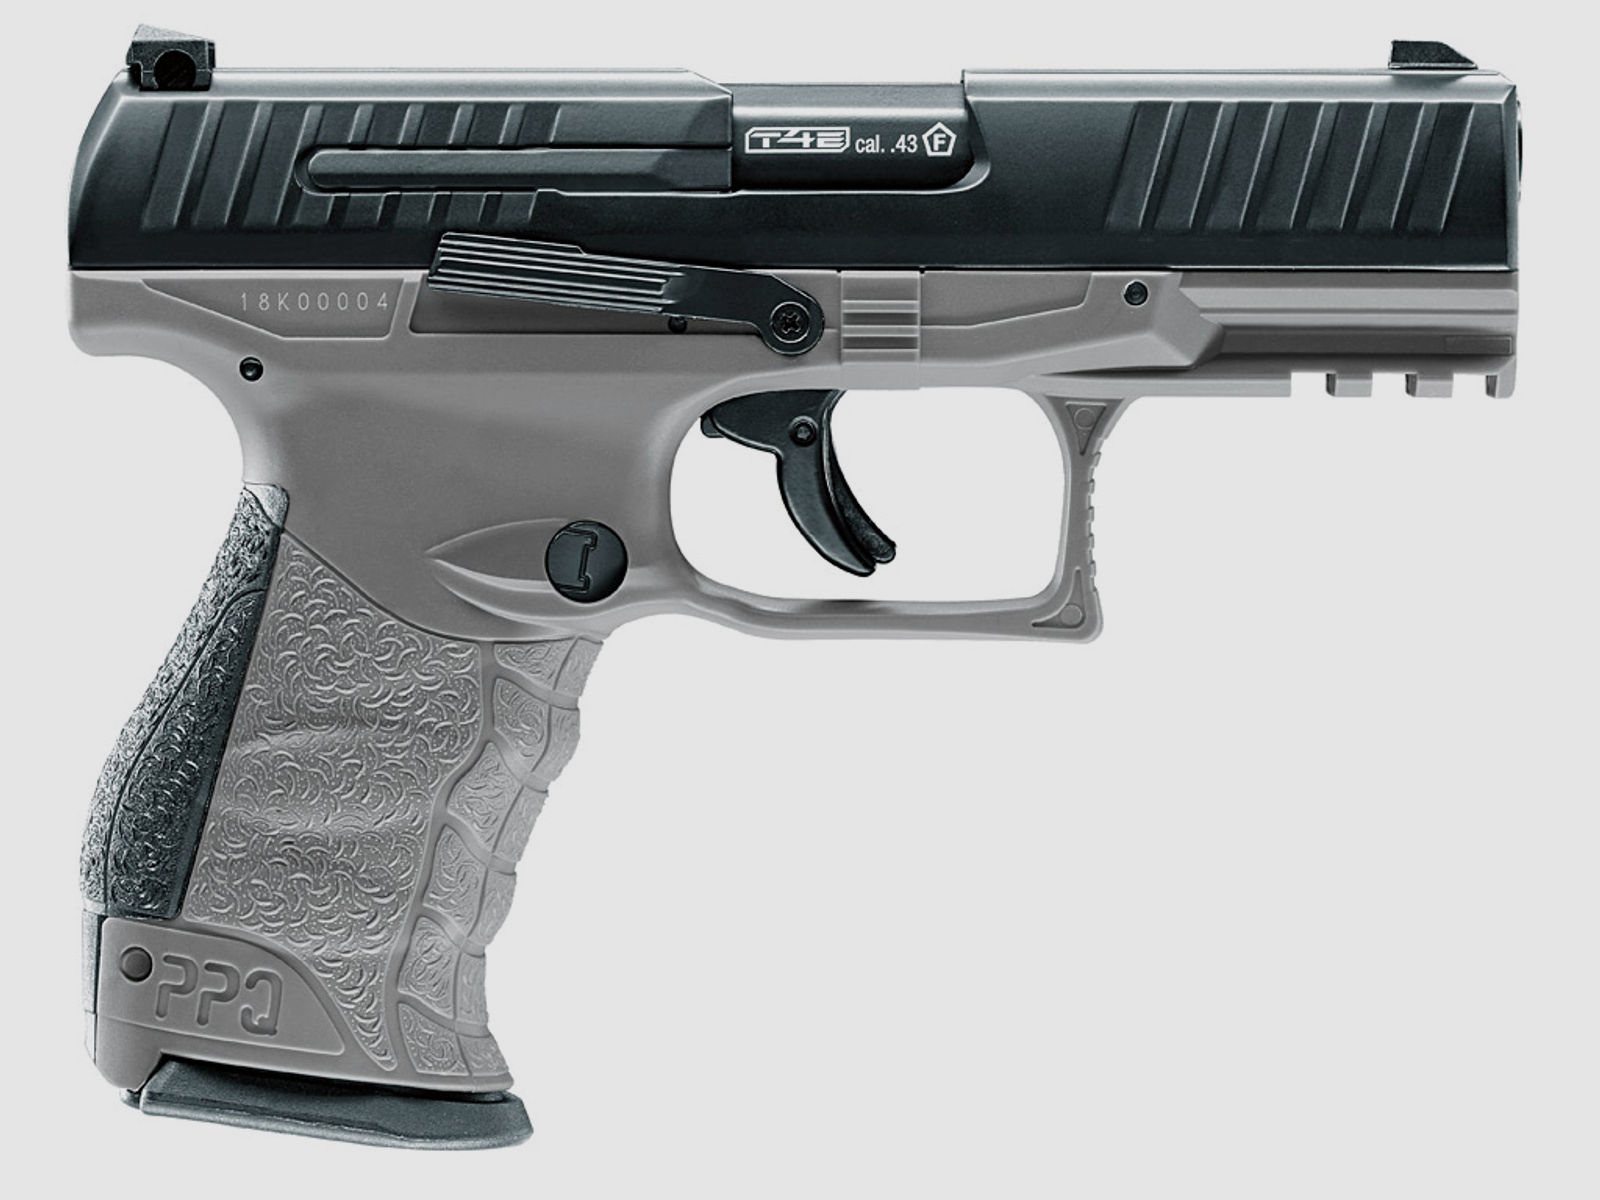 CO2 Pistole RAM Markierer Walther PPQ M2 T4E tungsten gray fĂĽr Gummi-, Pfeffer- und Farbkugeln Kaliber .43 (P18)